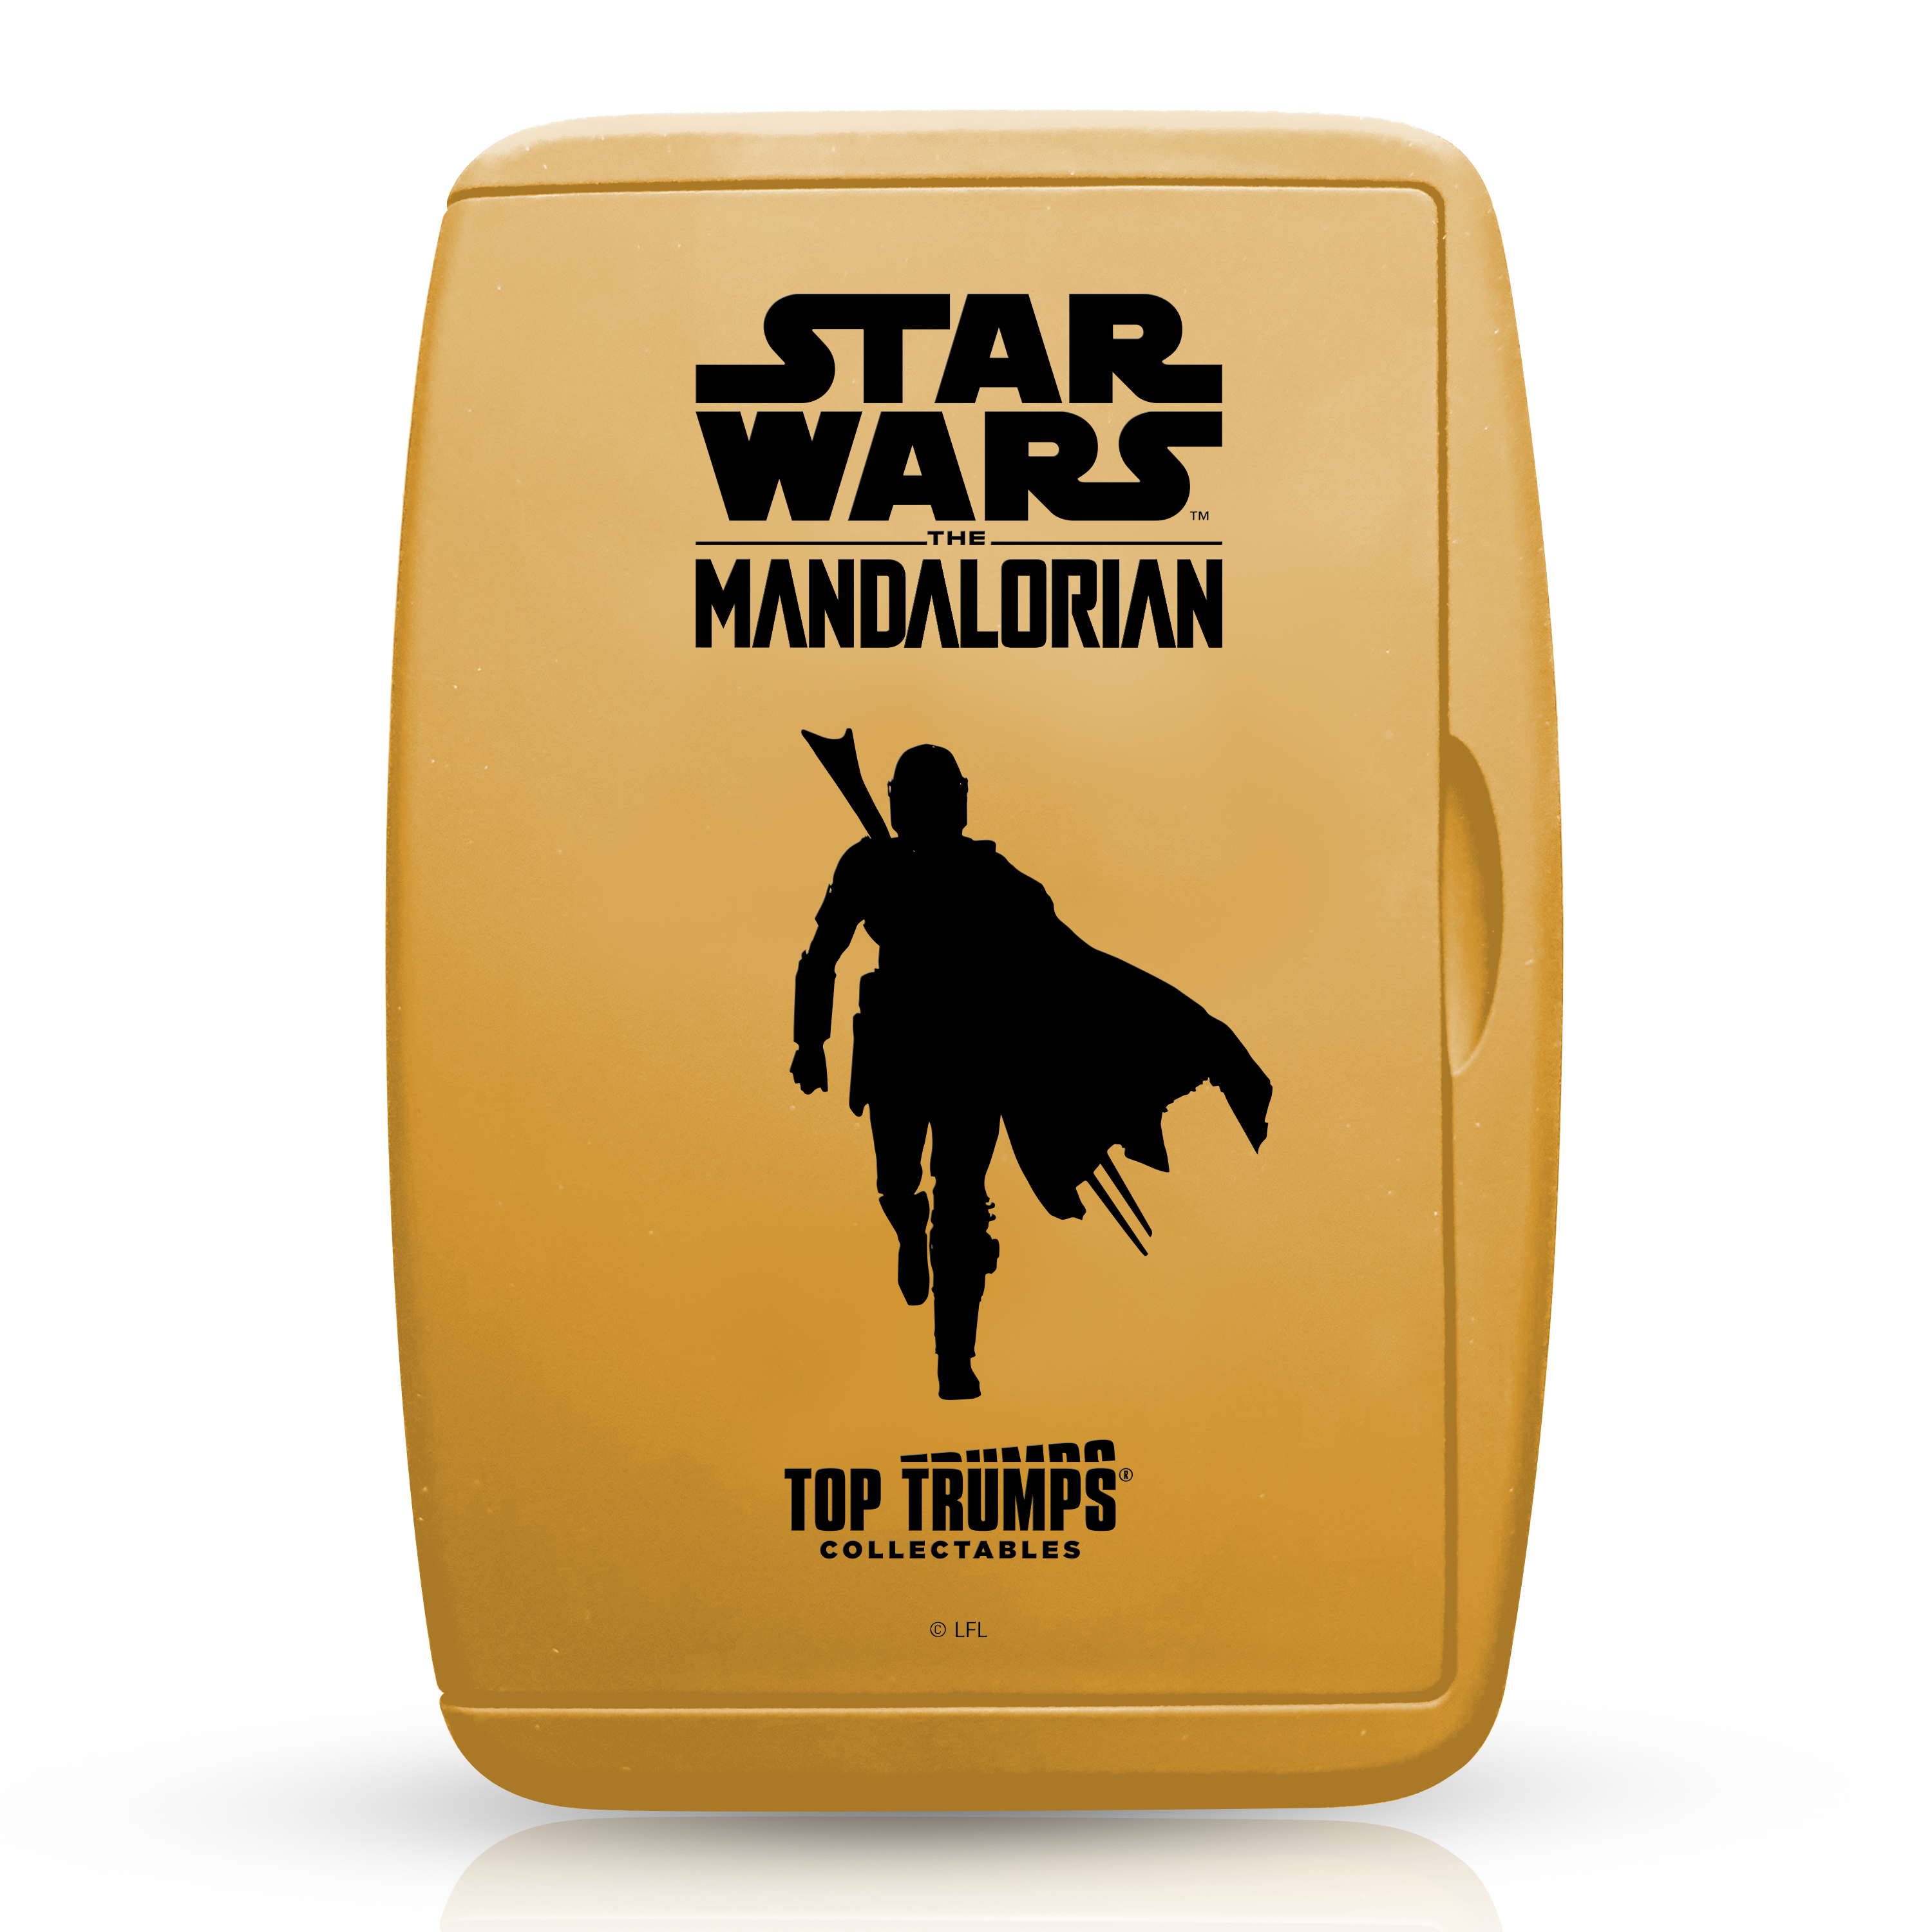 Top Trumps - Star Wars Mandalorian Collectables